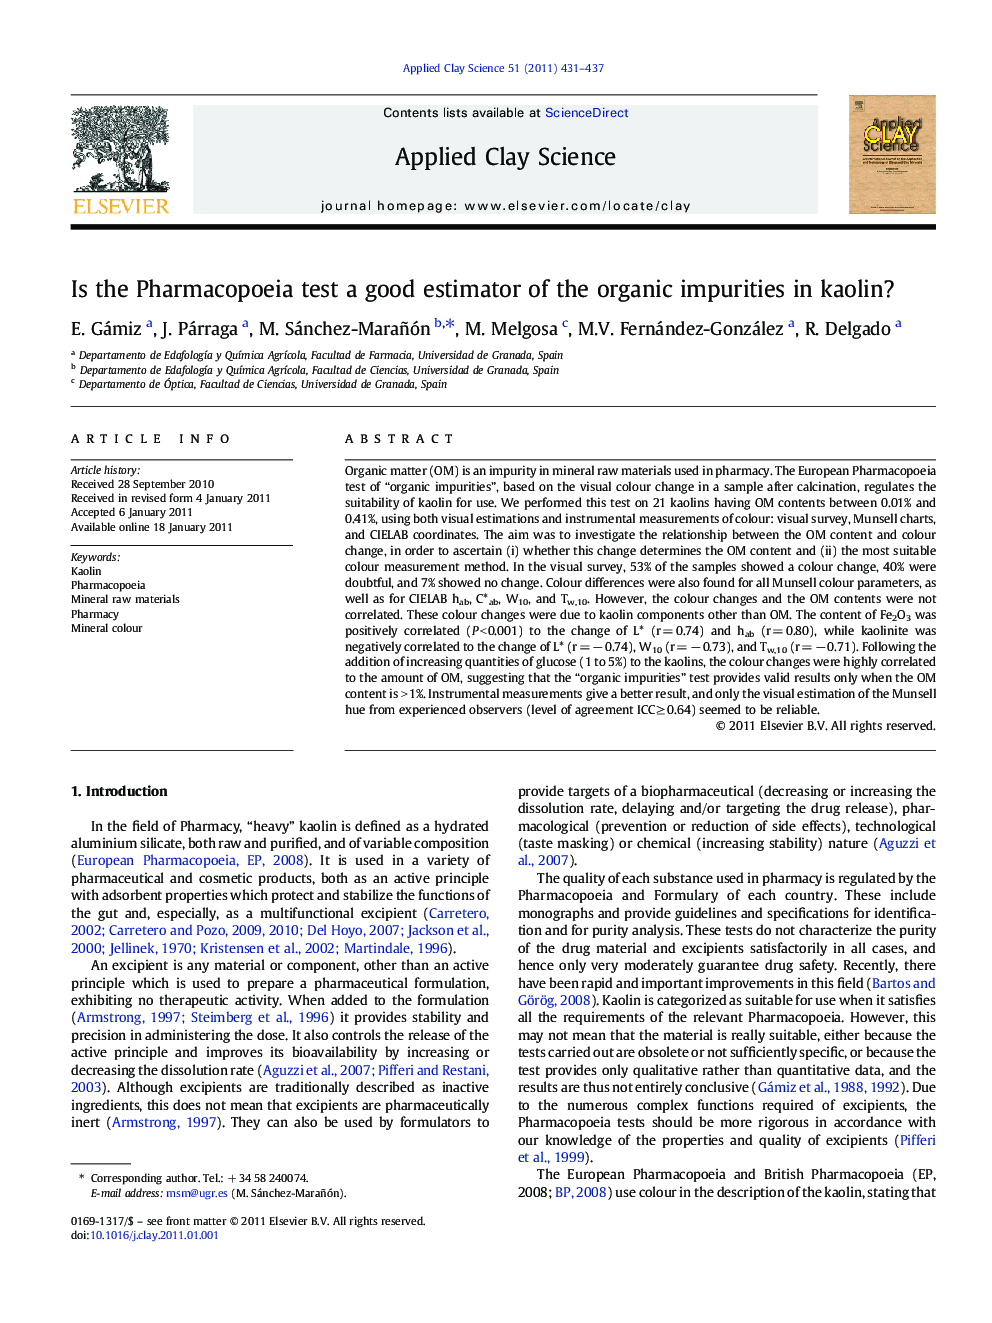 Is the Pharmacopoeia test a good estimator of the organic impurities in kaolin?